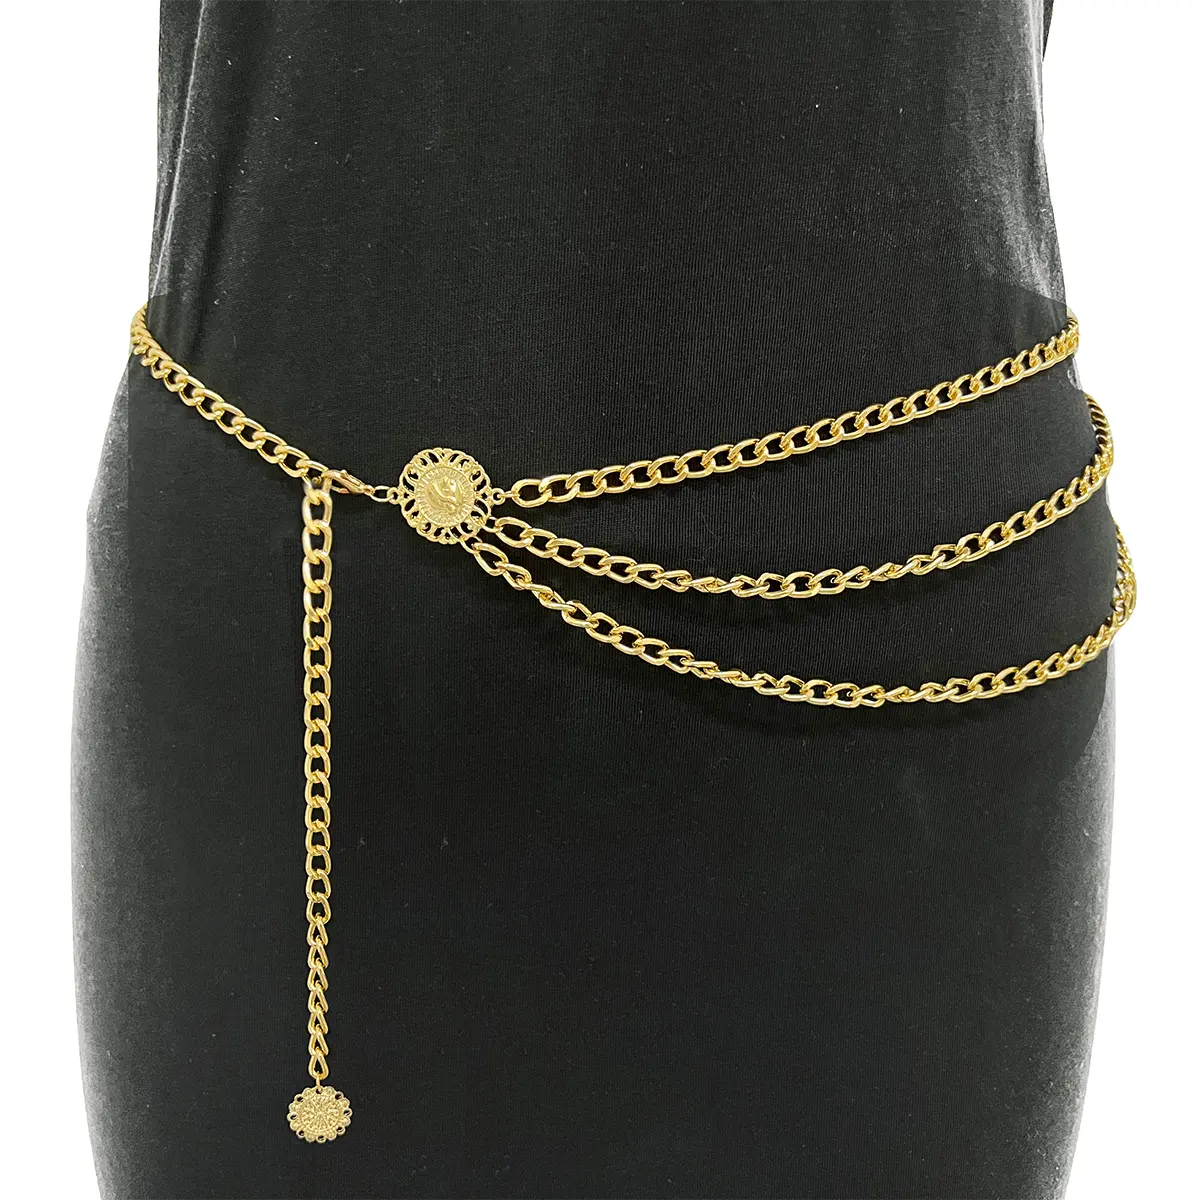 Adjustable Women Long Belt Body Belly Jewelry for Dresses Jeans Trousers Multilayer Metal Waist Chain Belt for Women